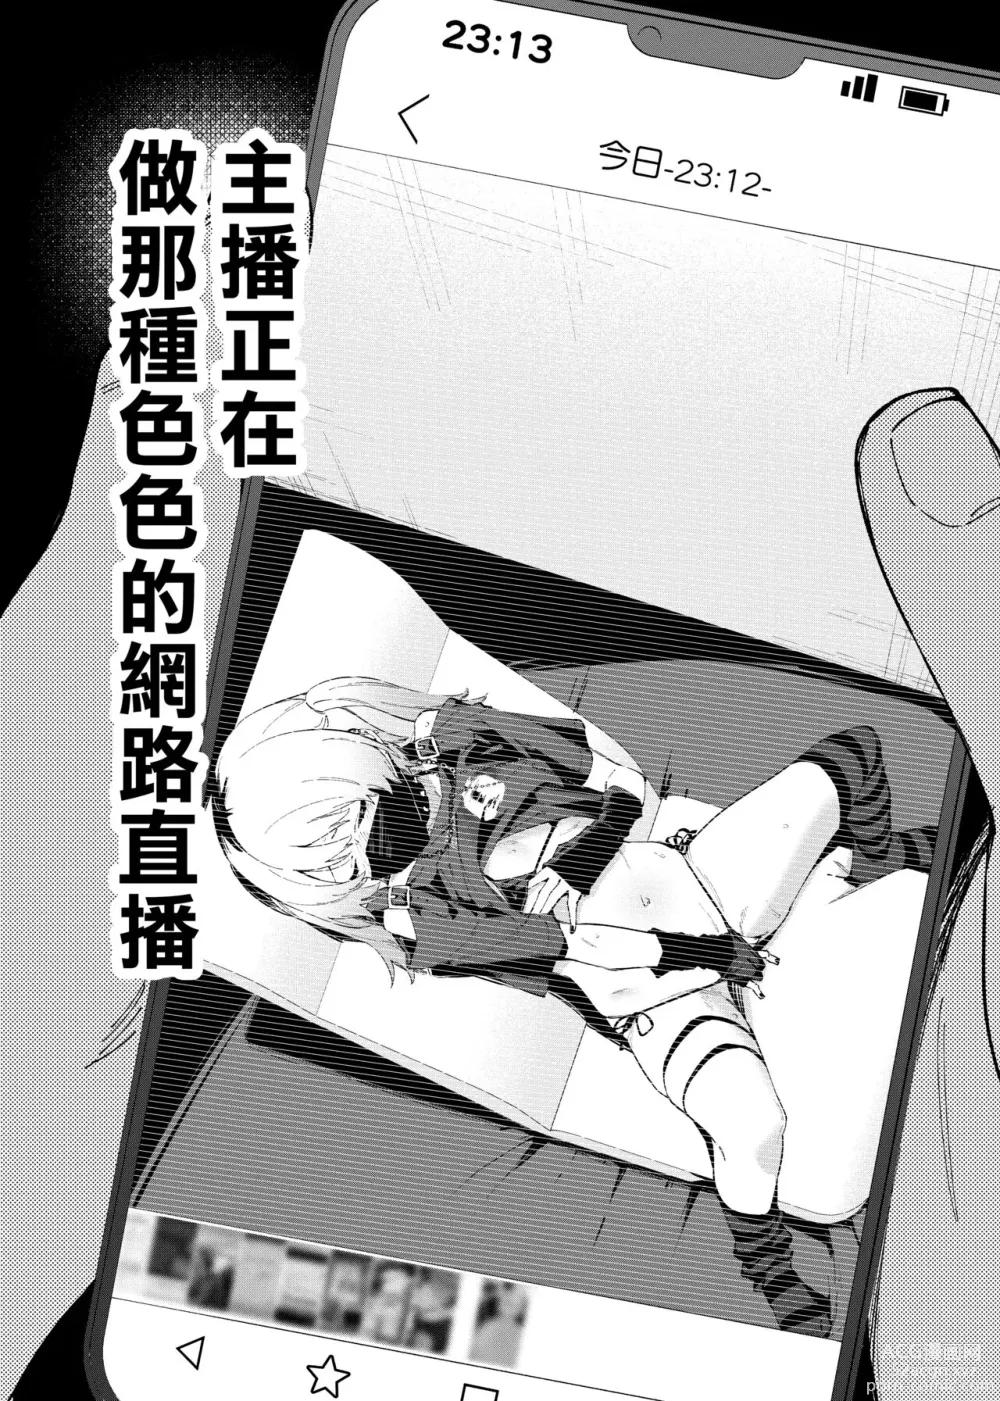 Page 4 of manga rinzin ha yuumei haisin sya4 nin me